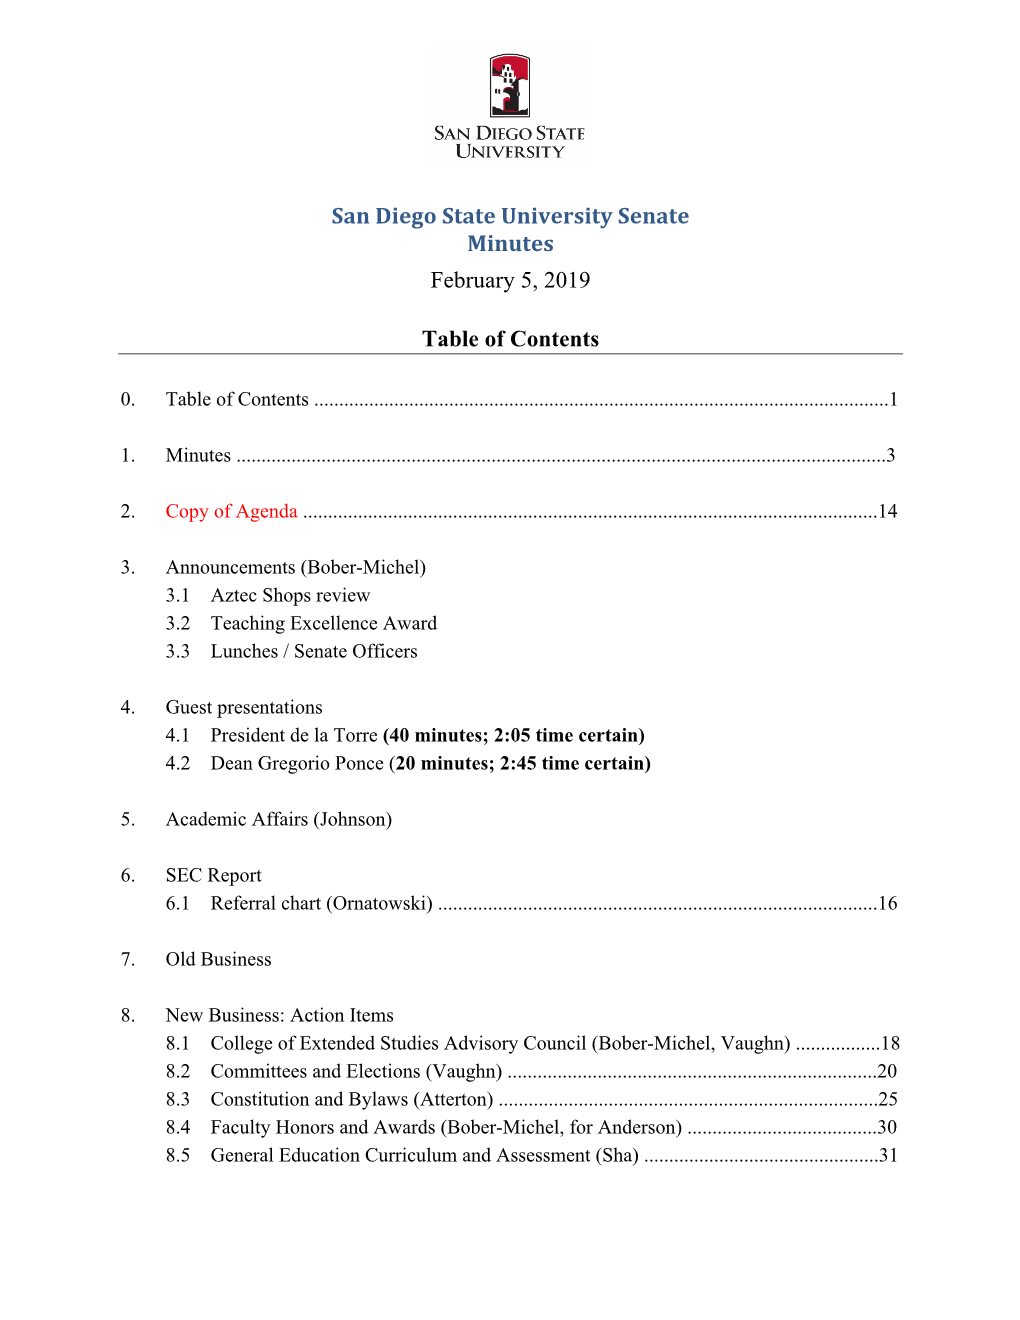 San Diego State University Senate Minutes February 5, 2019 Table Of